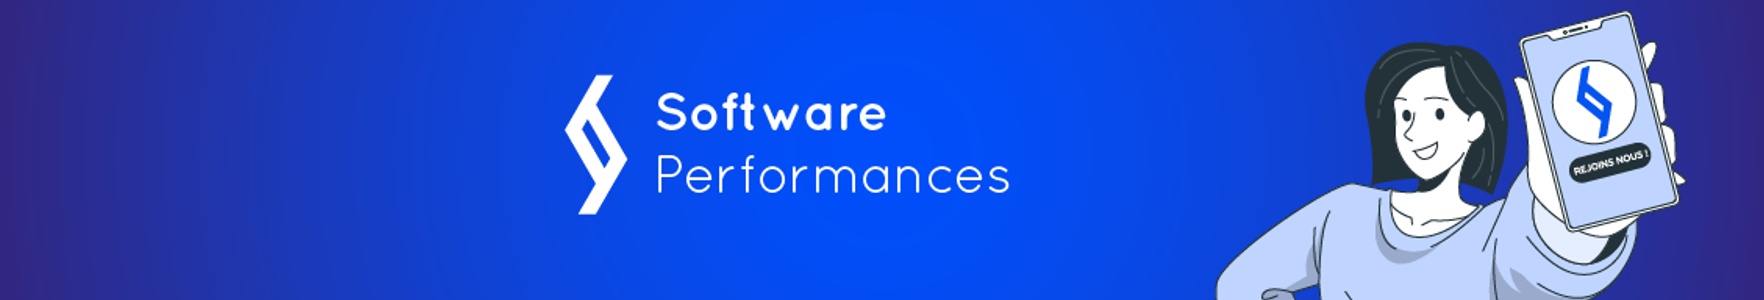 Software Performances